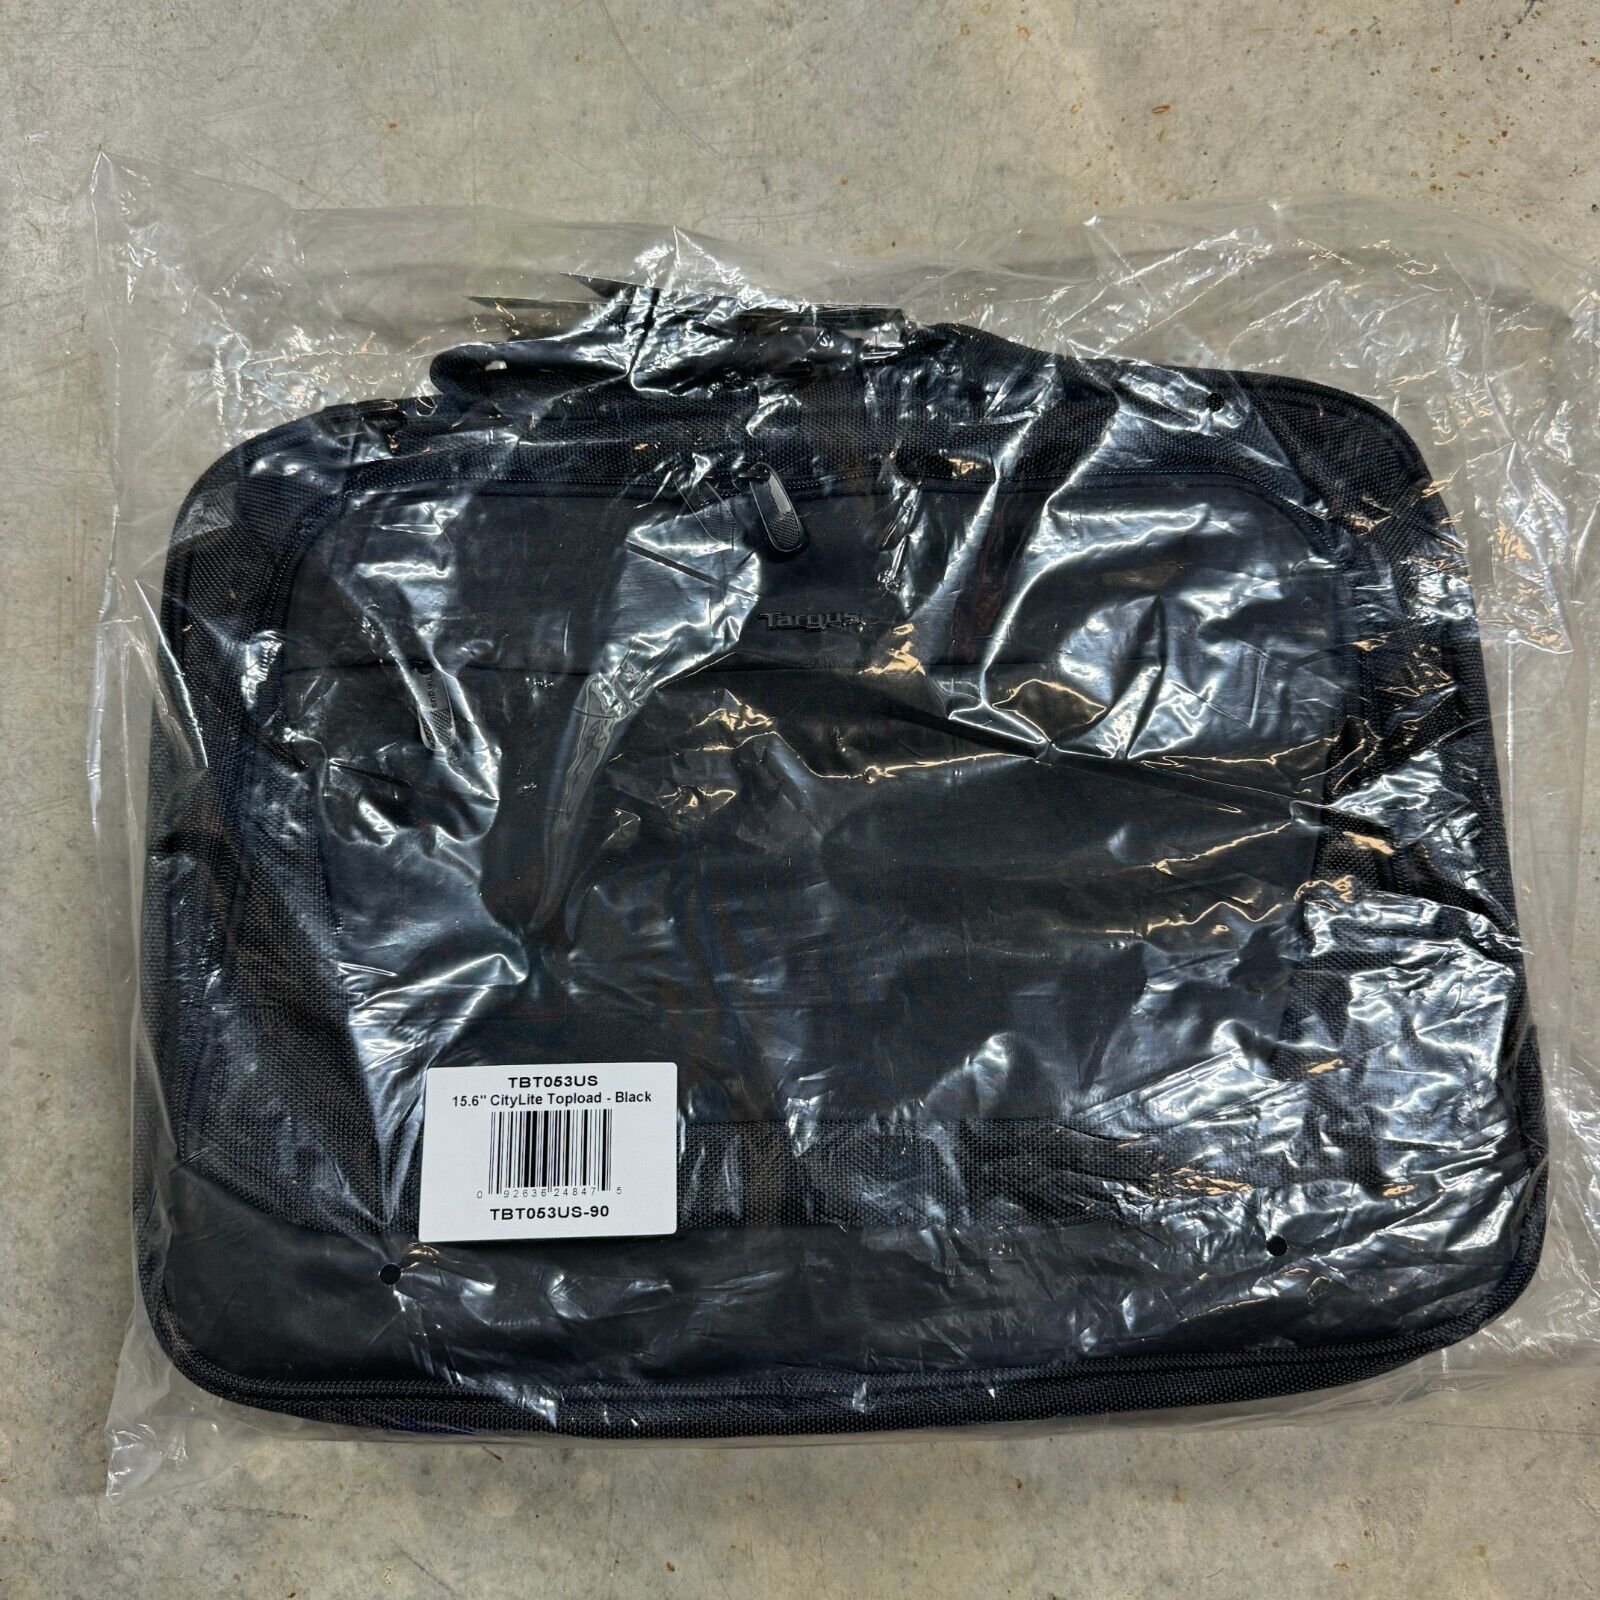 Targus CityLite Laptop Case Bag 15” Black TBT053US90 NEW Top Load Messenger